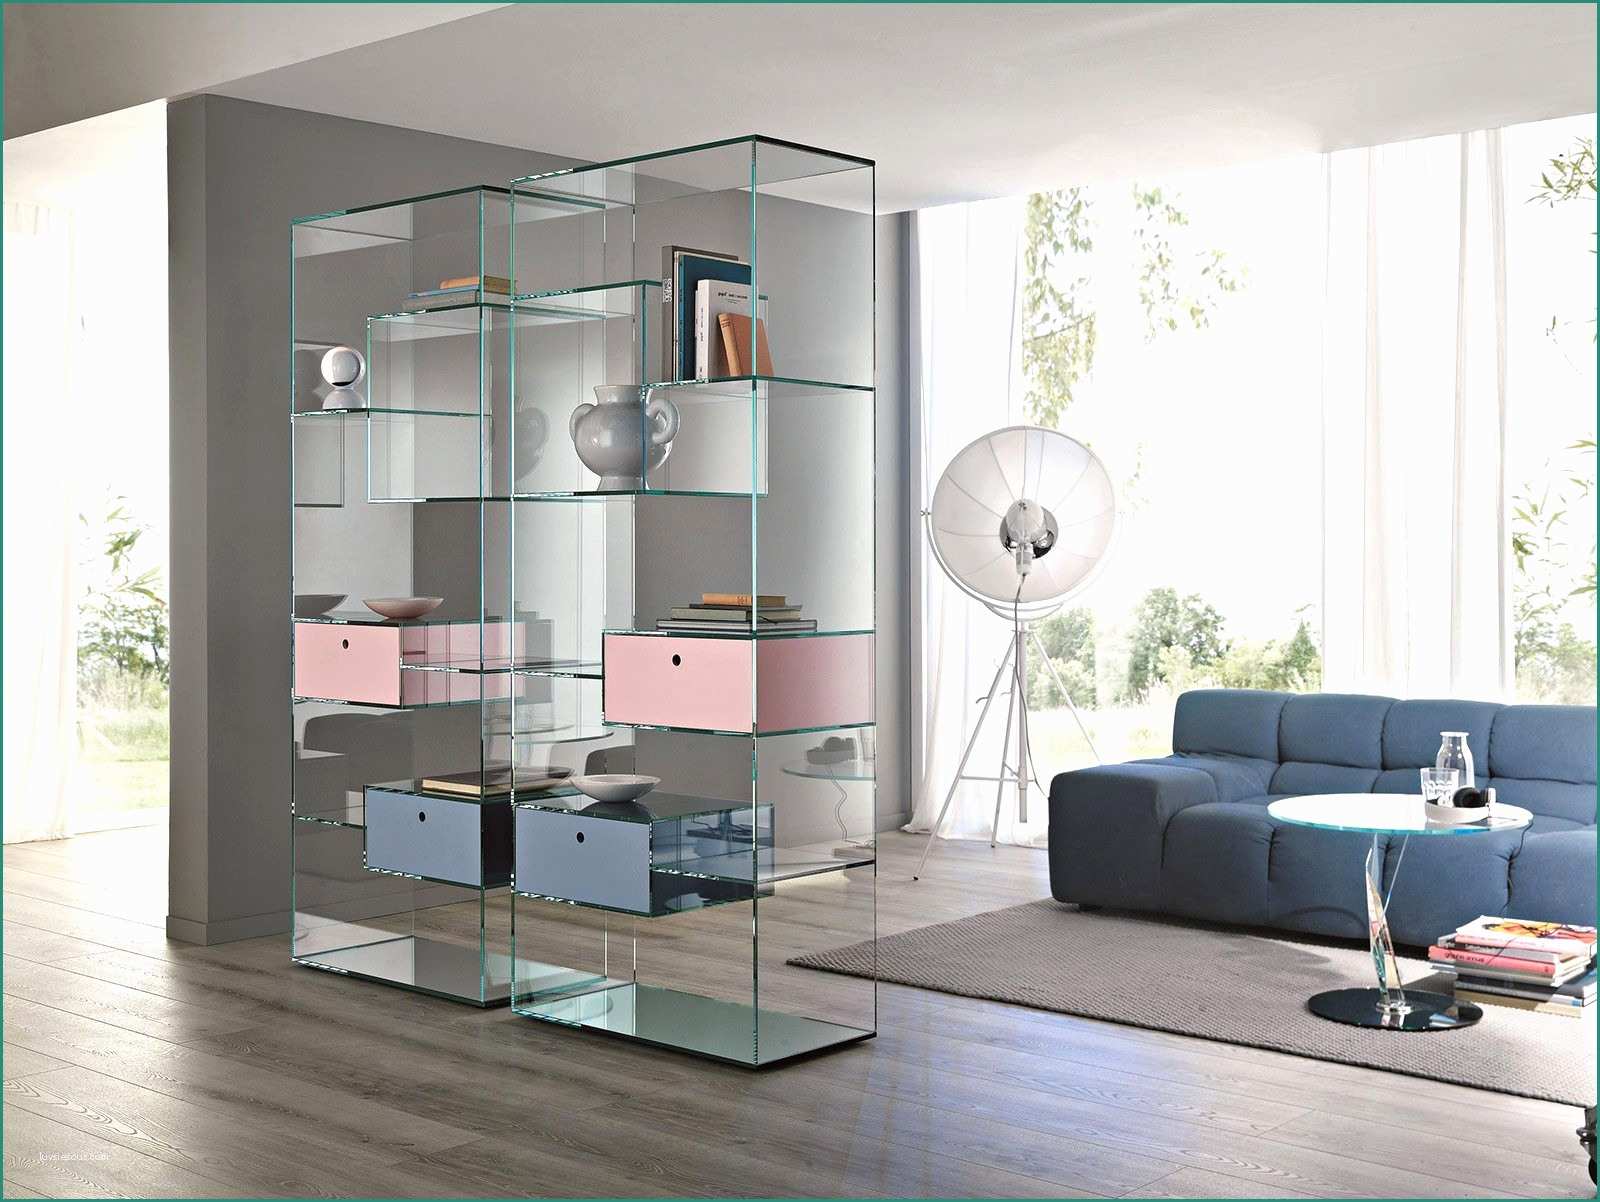 Pareti Mobili Divisorie Ikea E Separa Ambienti Design Stunning with Separa Ambienti Design Free